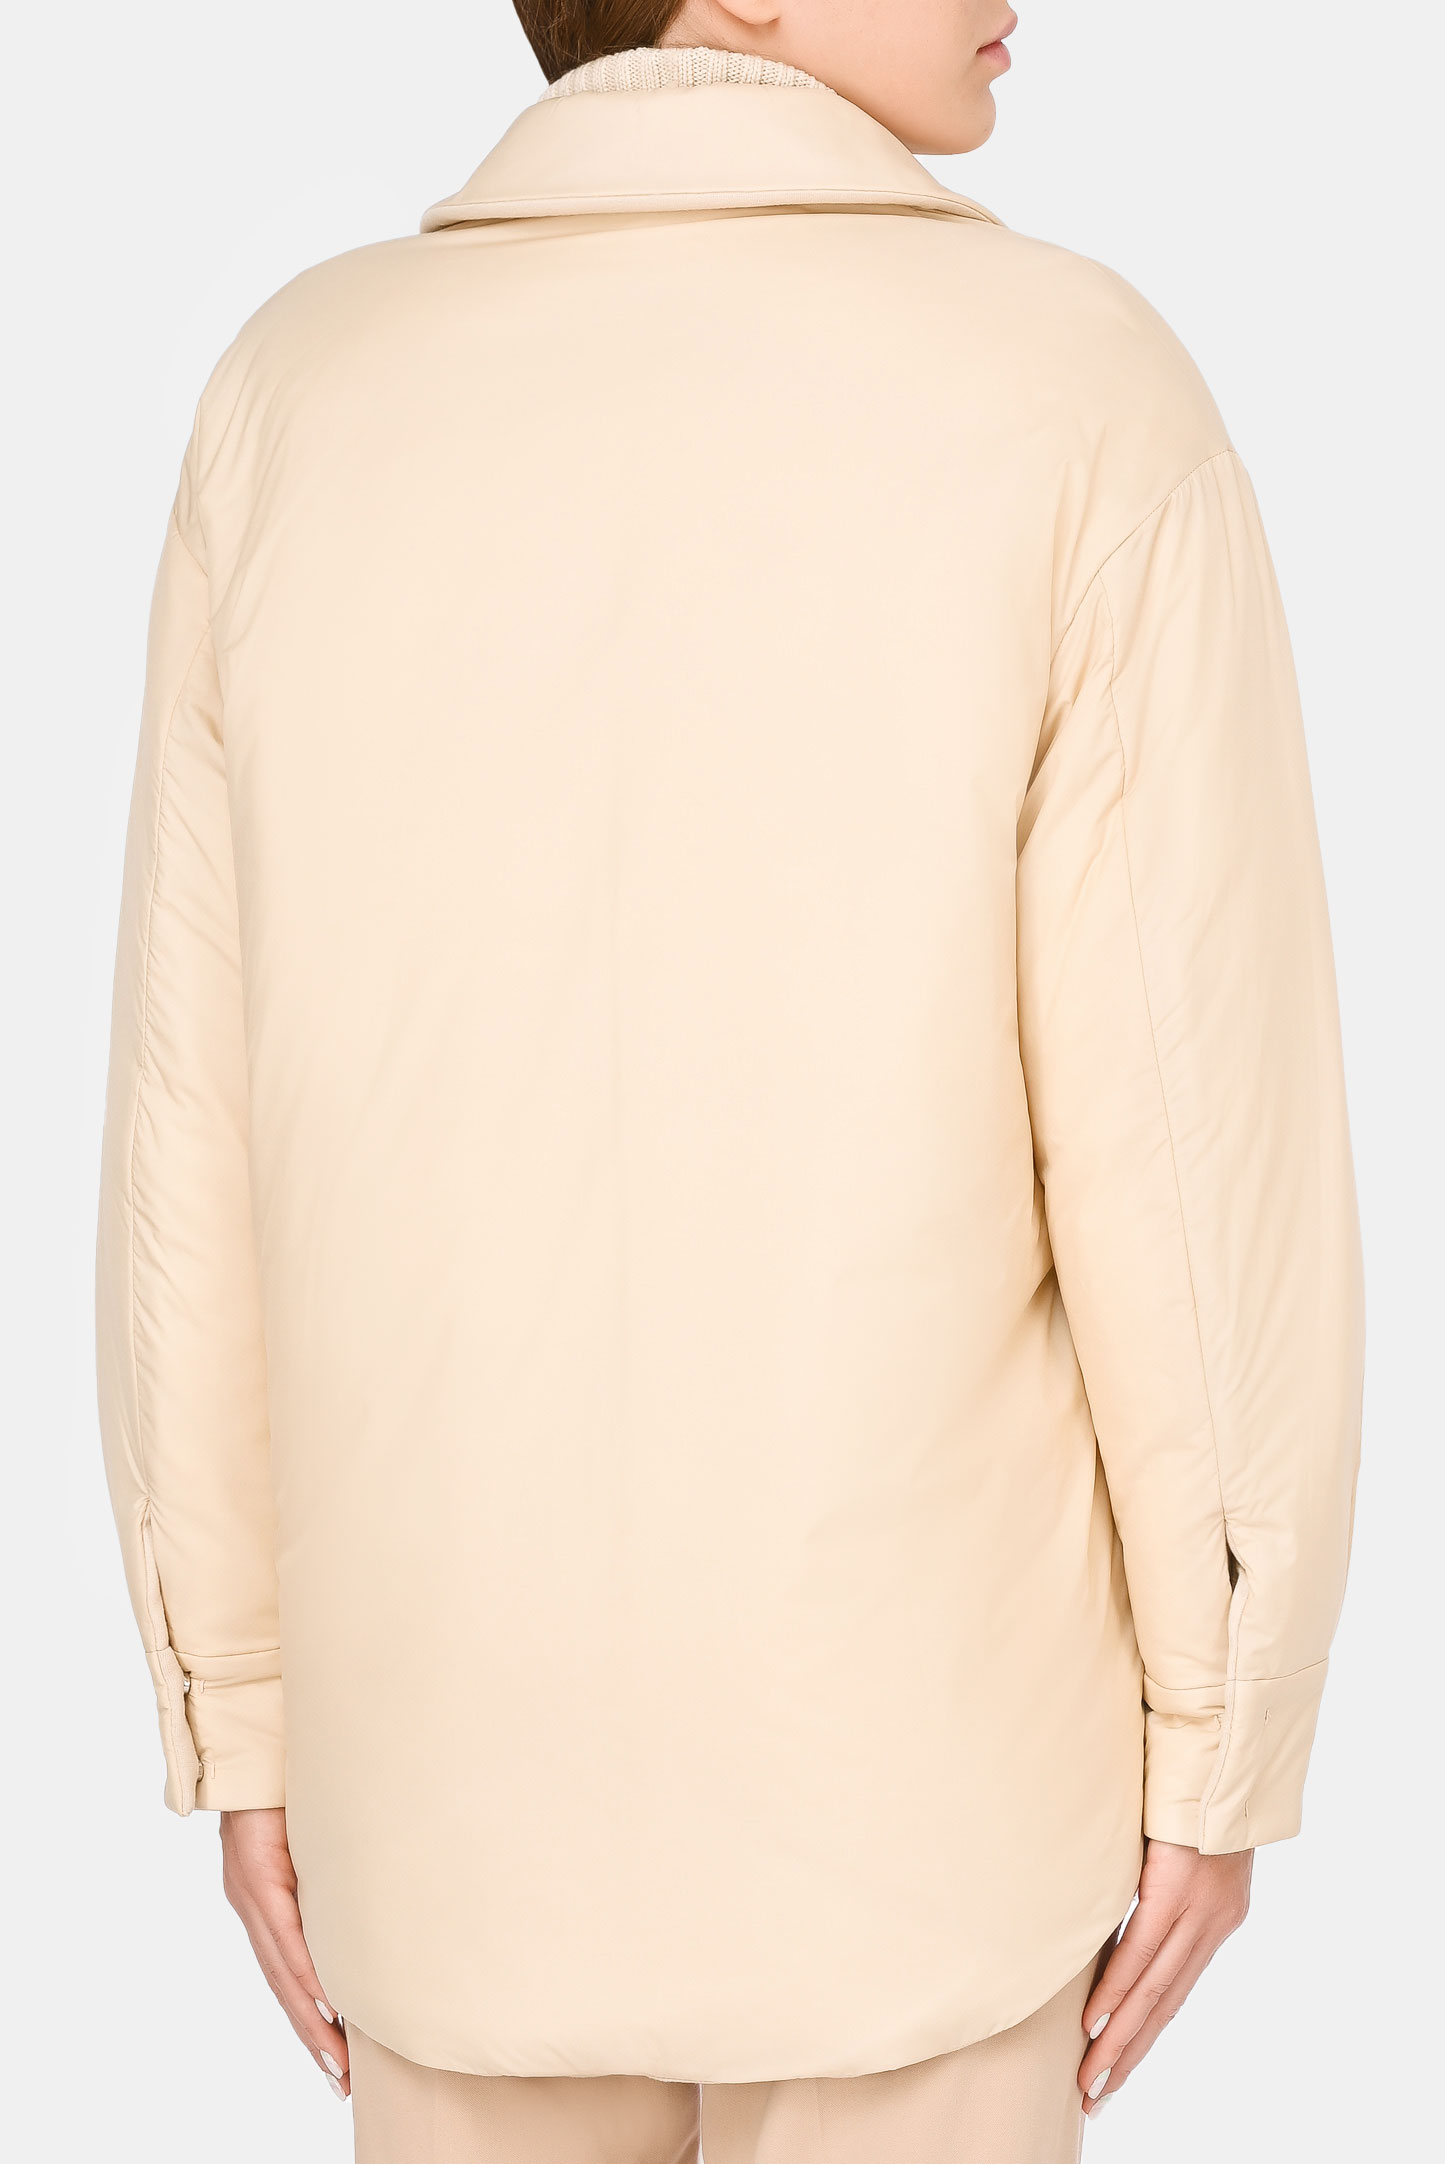 Куртка LORO PIANA F1-FAL7249, цвет: Молочный, Женский